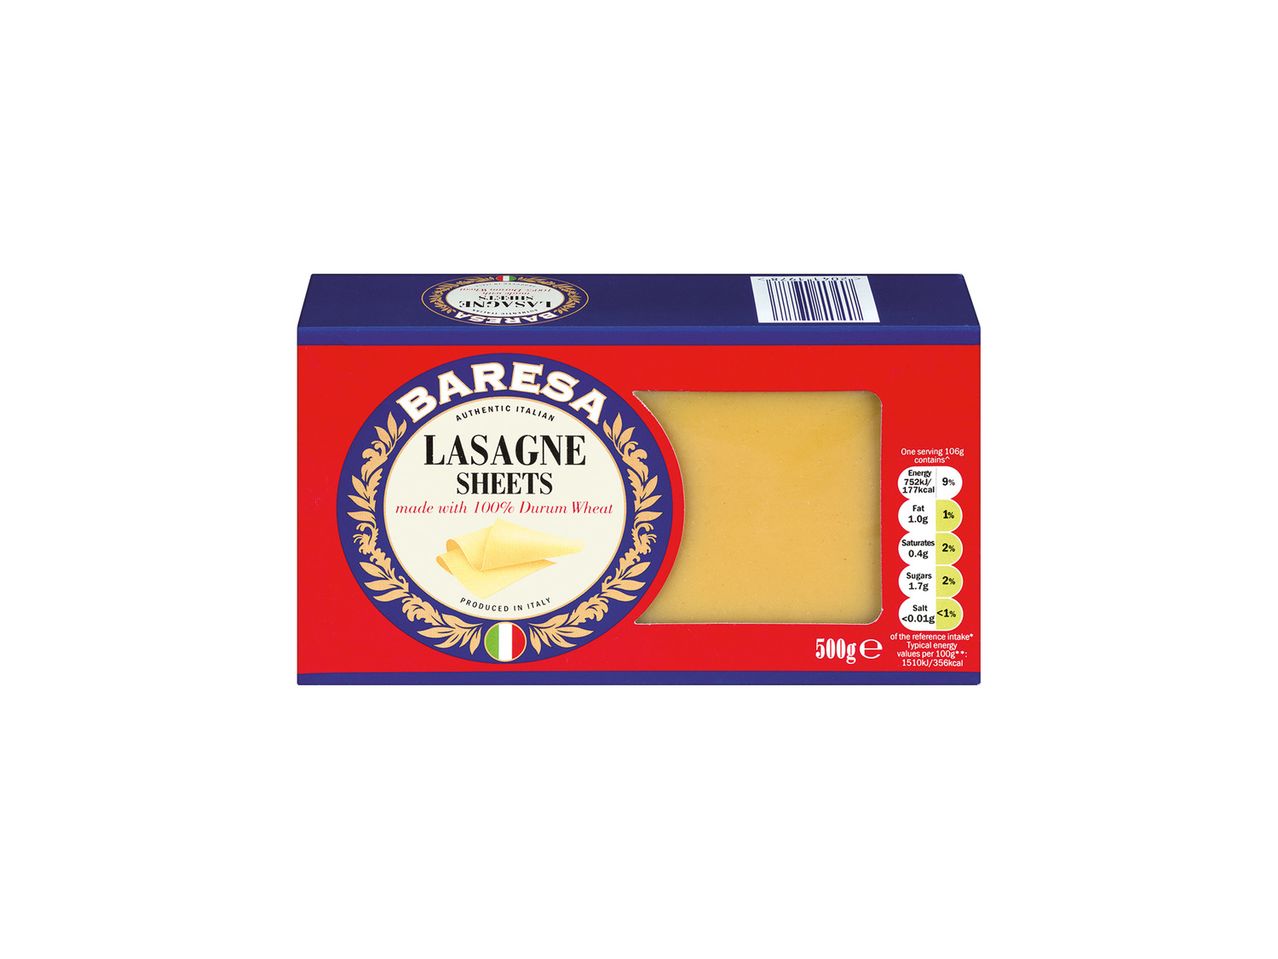 Go to full screen view: Baresa Lasagne Sheets - Image 1